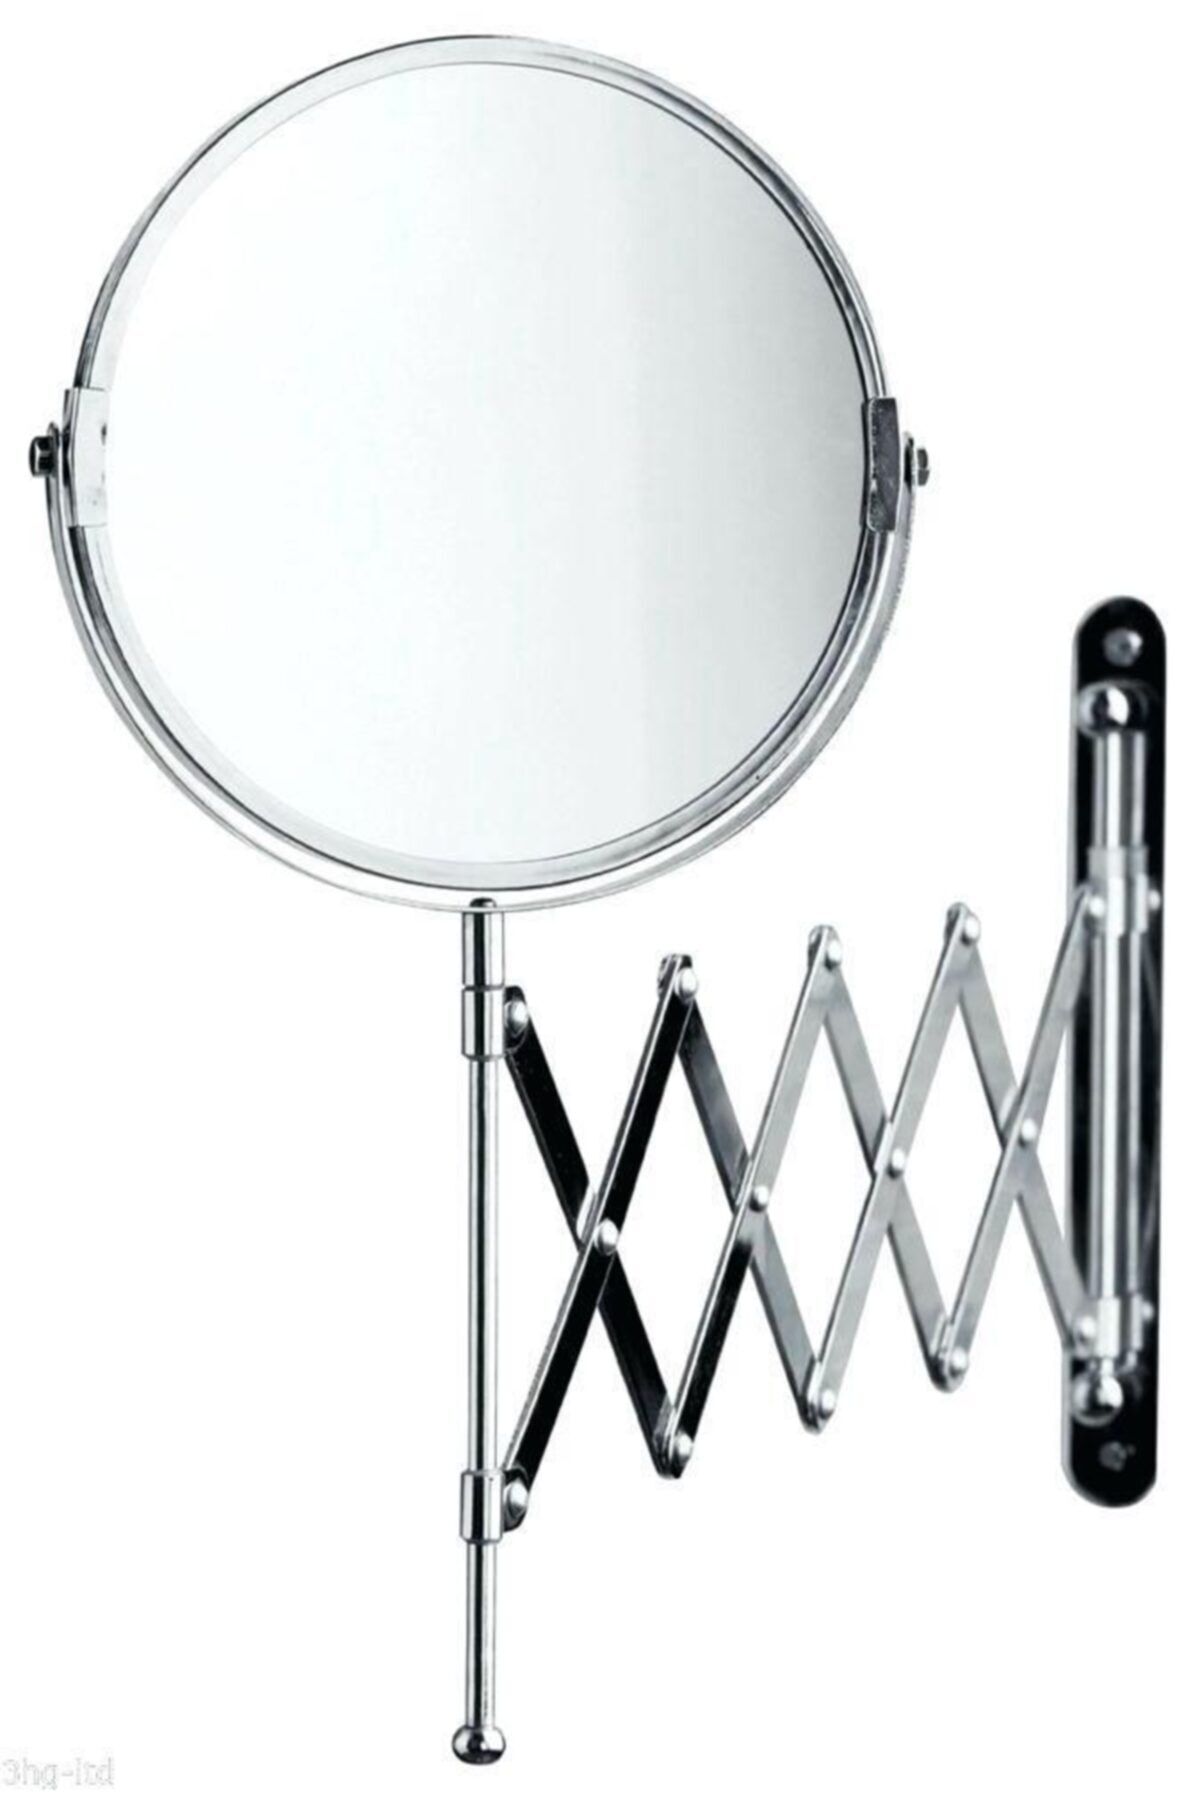 BARBUN Frack Büyüteçli Çift Taraflı Ayna Makyaj Ikea Traş Tıraş Aynası